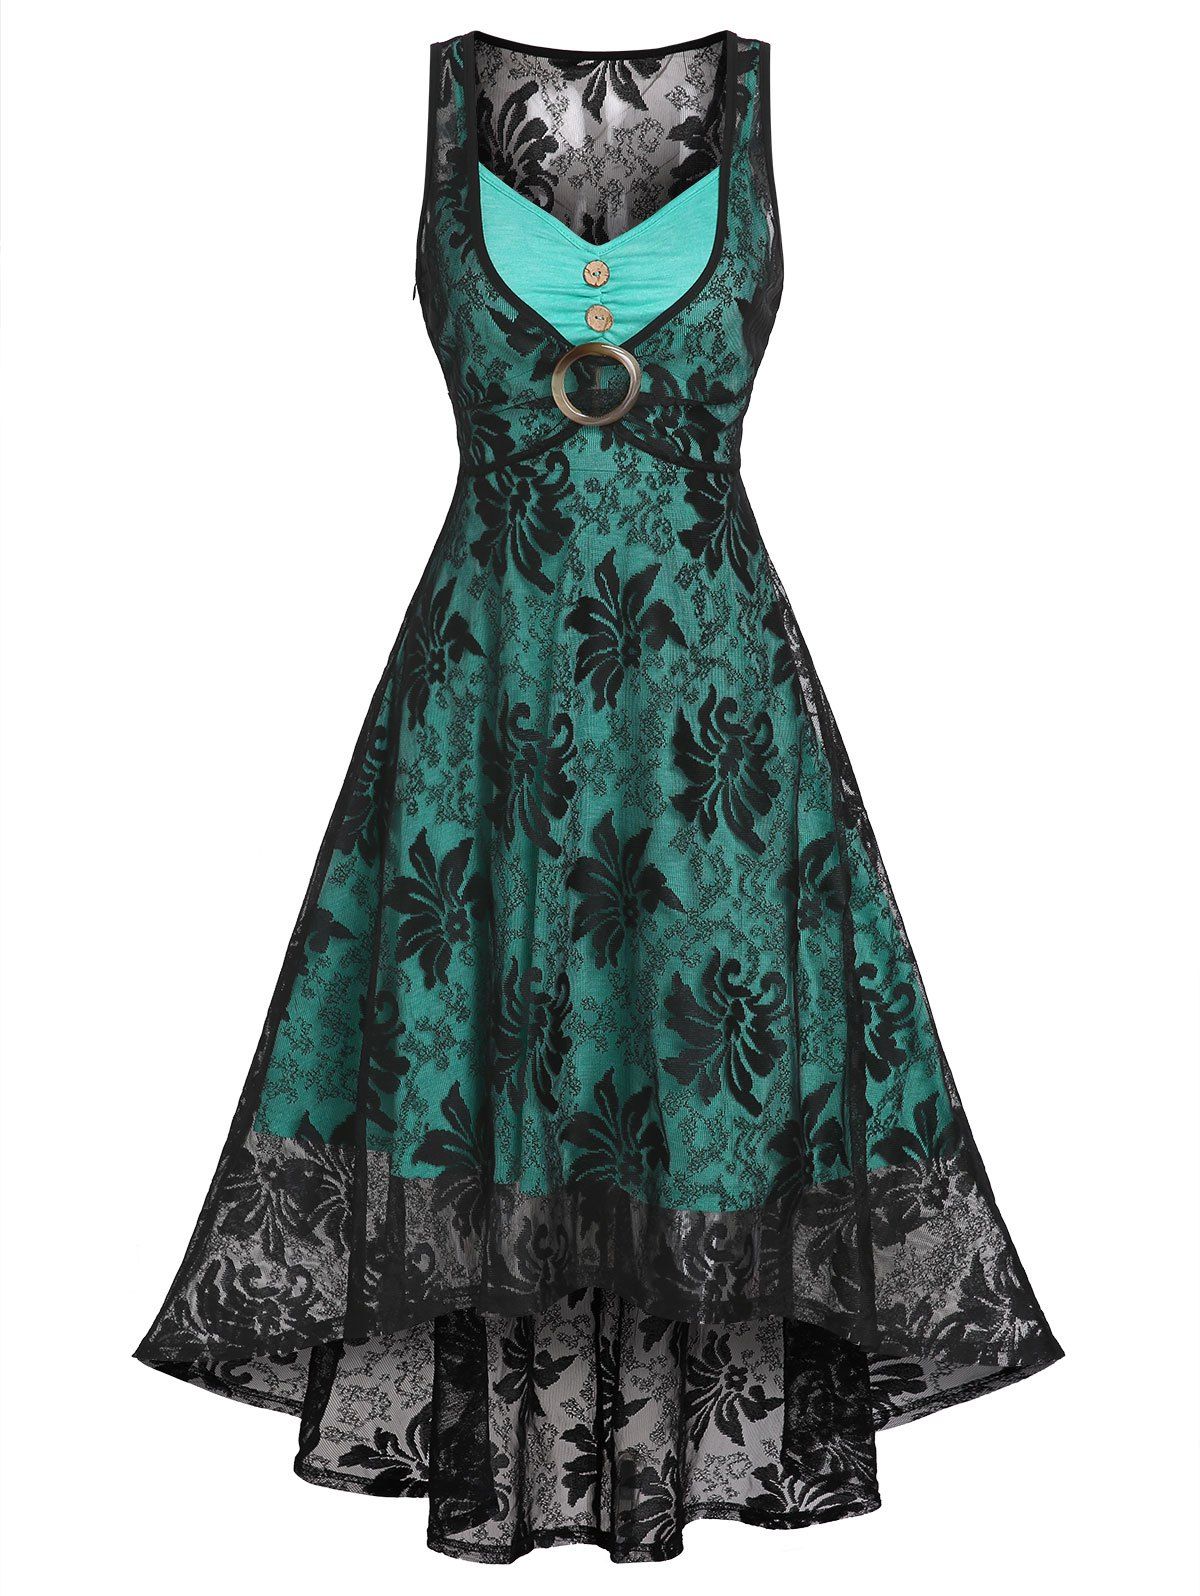 Mock Button Plain Color Corset Style Cami Dress and Floral Lace O Ring A Line Tank Dress Set - BLACK L